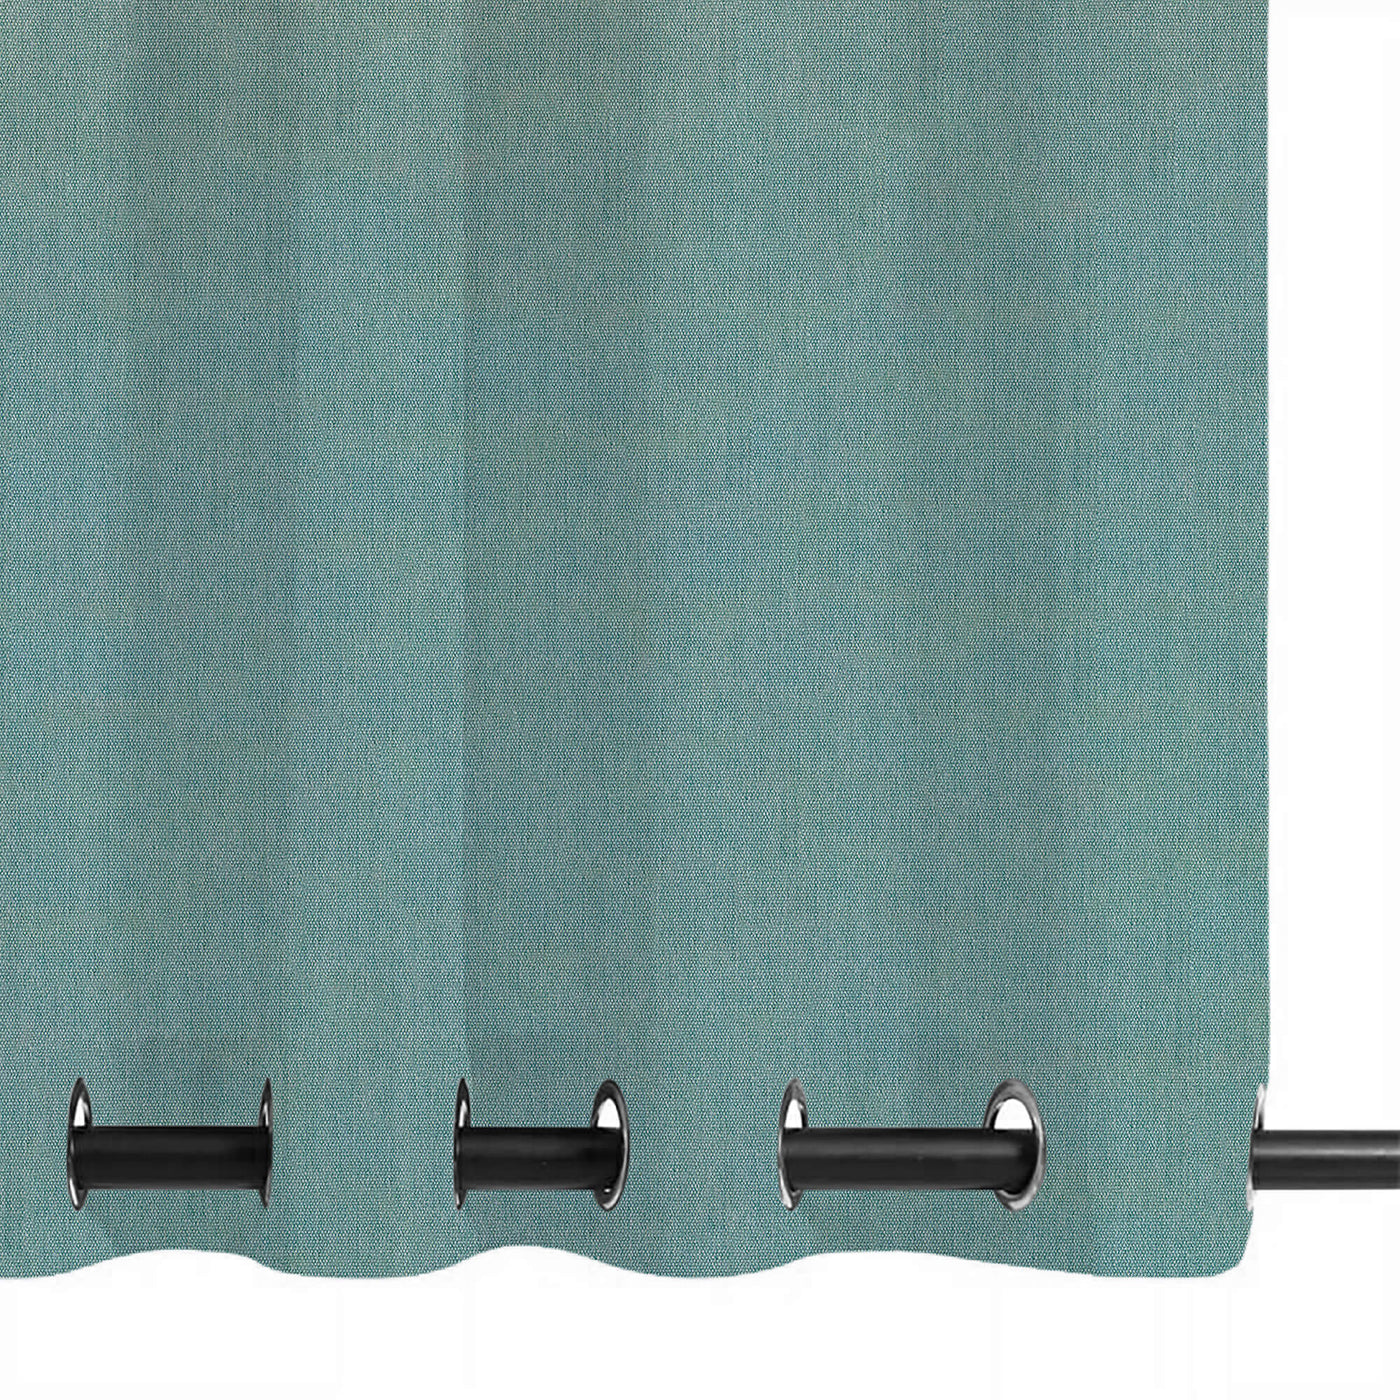 PENGI Outdoor Curtains Waterproof- Mix Reseda